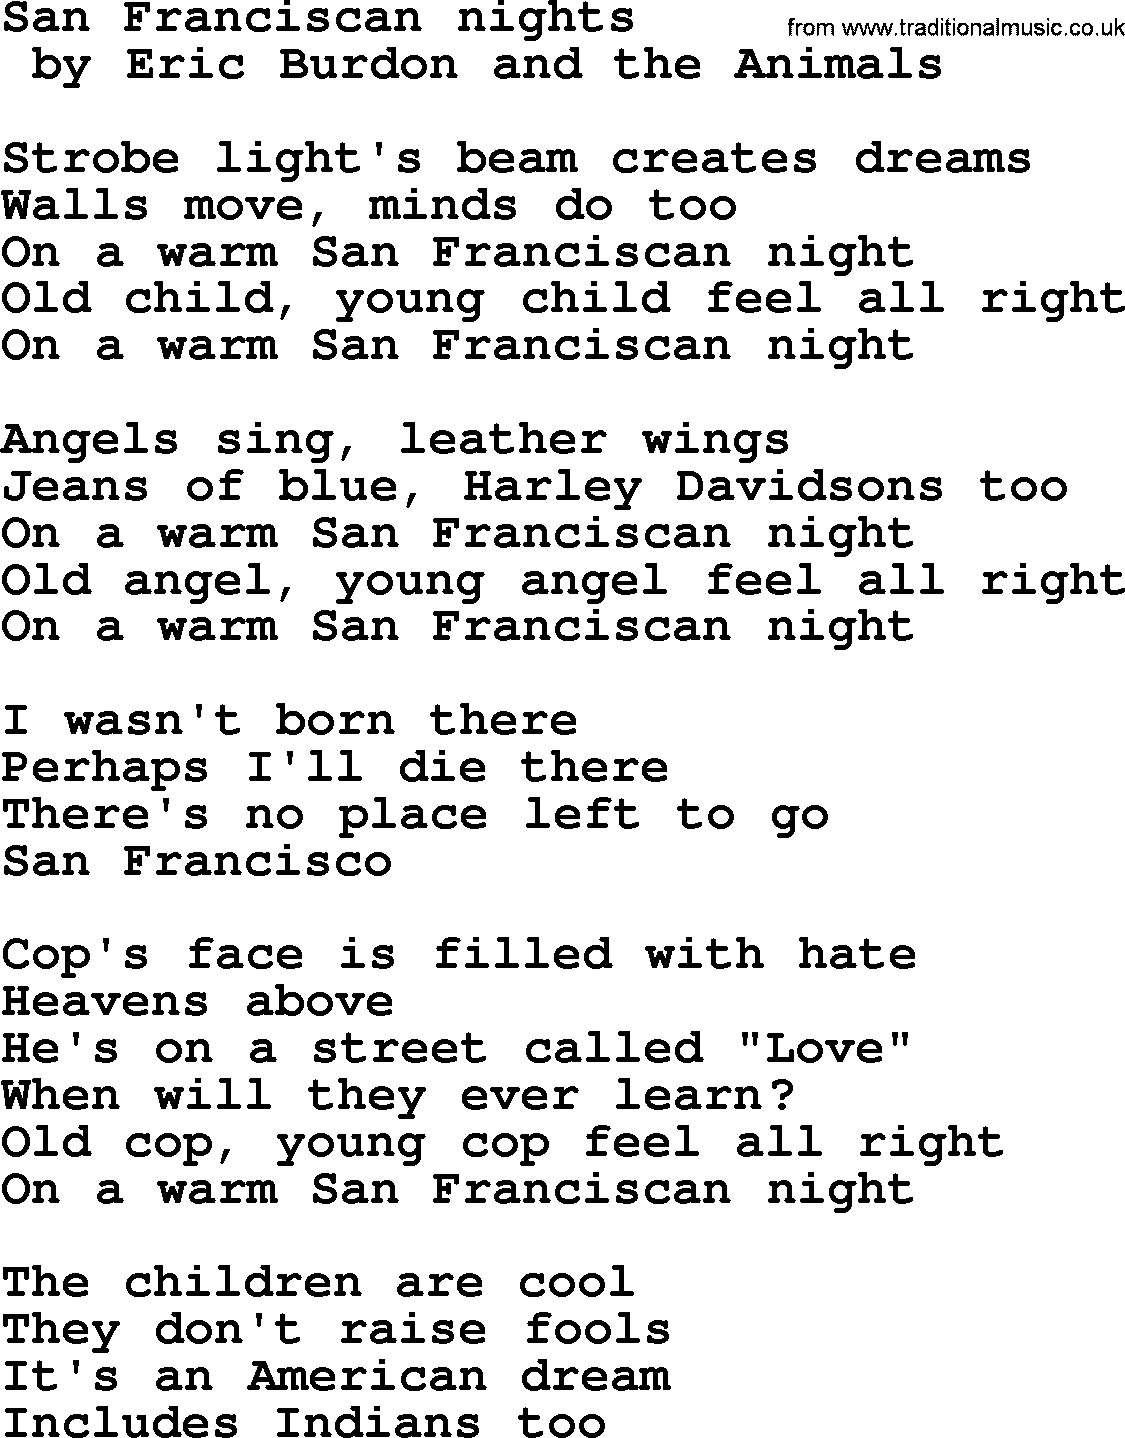 Bruce Springsteen song: San Franciscan Nights lyrics